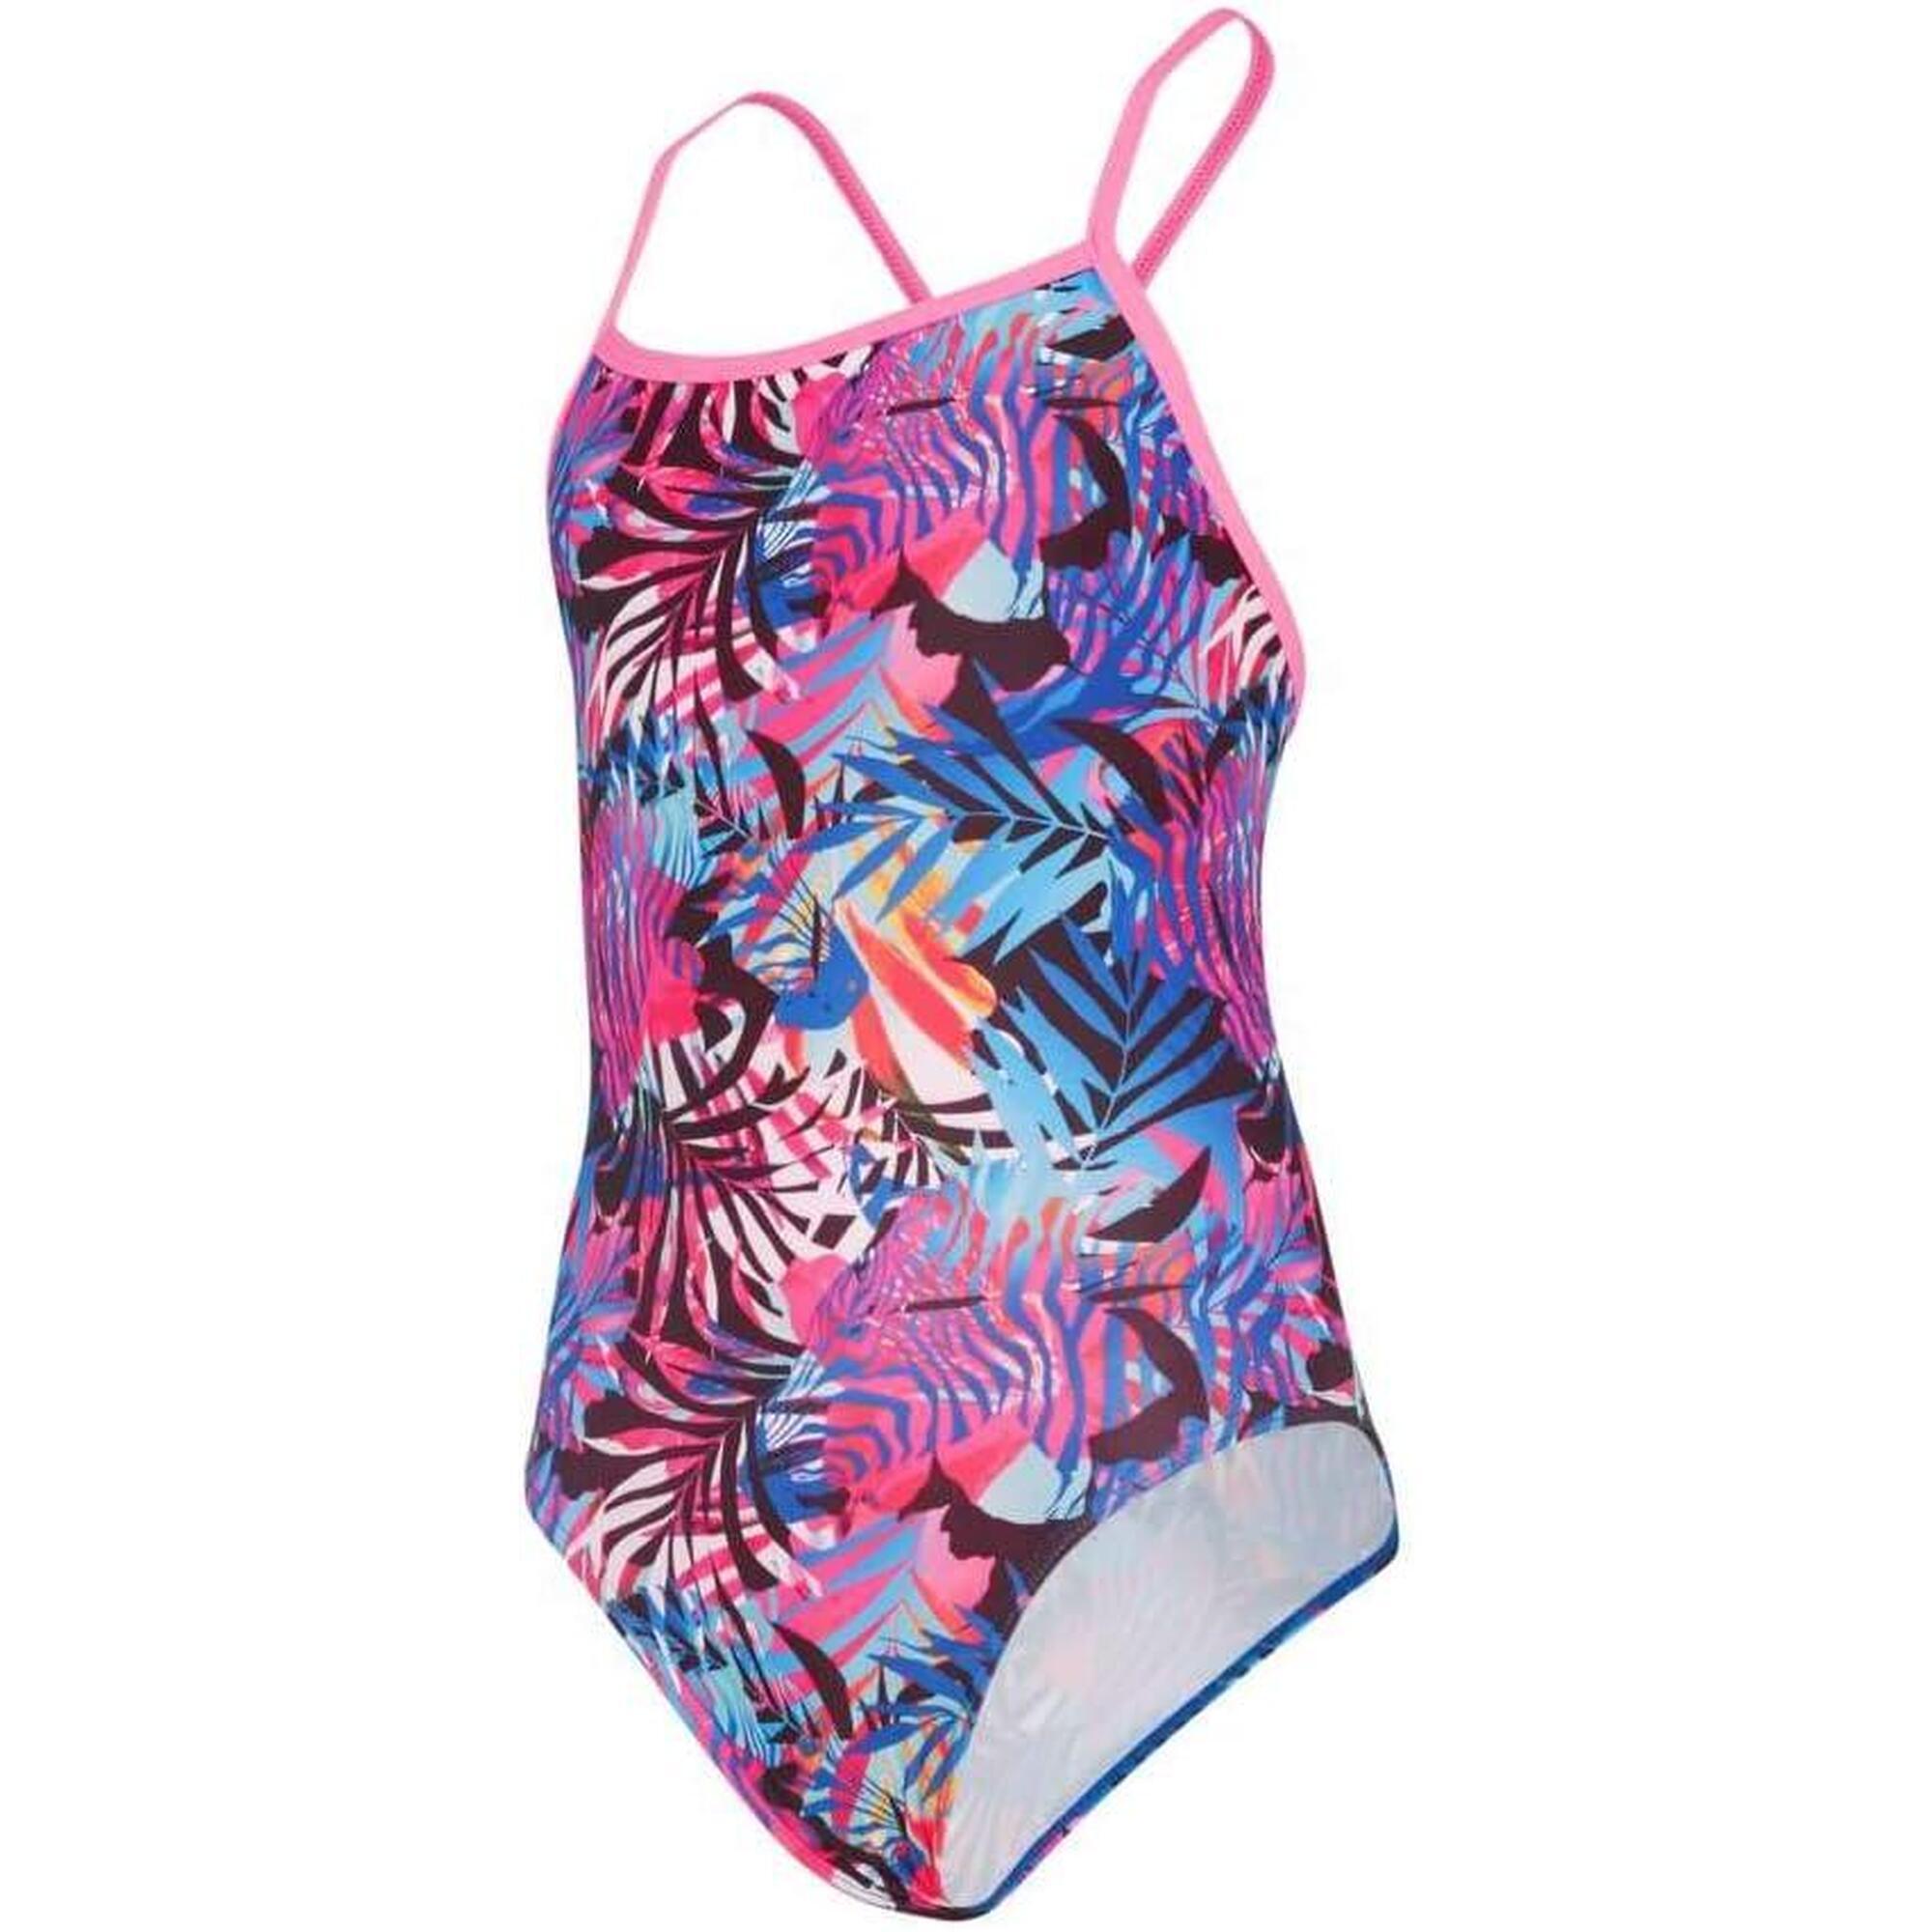 Maru - Girls Swimsuit - Savannah Fly Back - (GK9049)